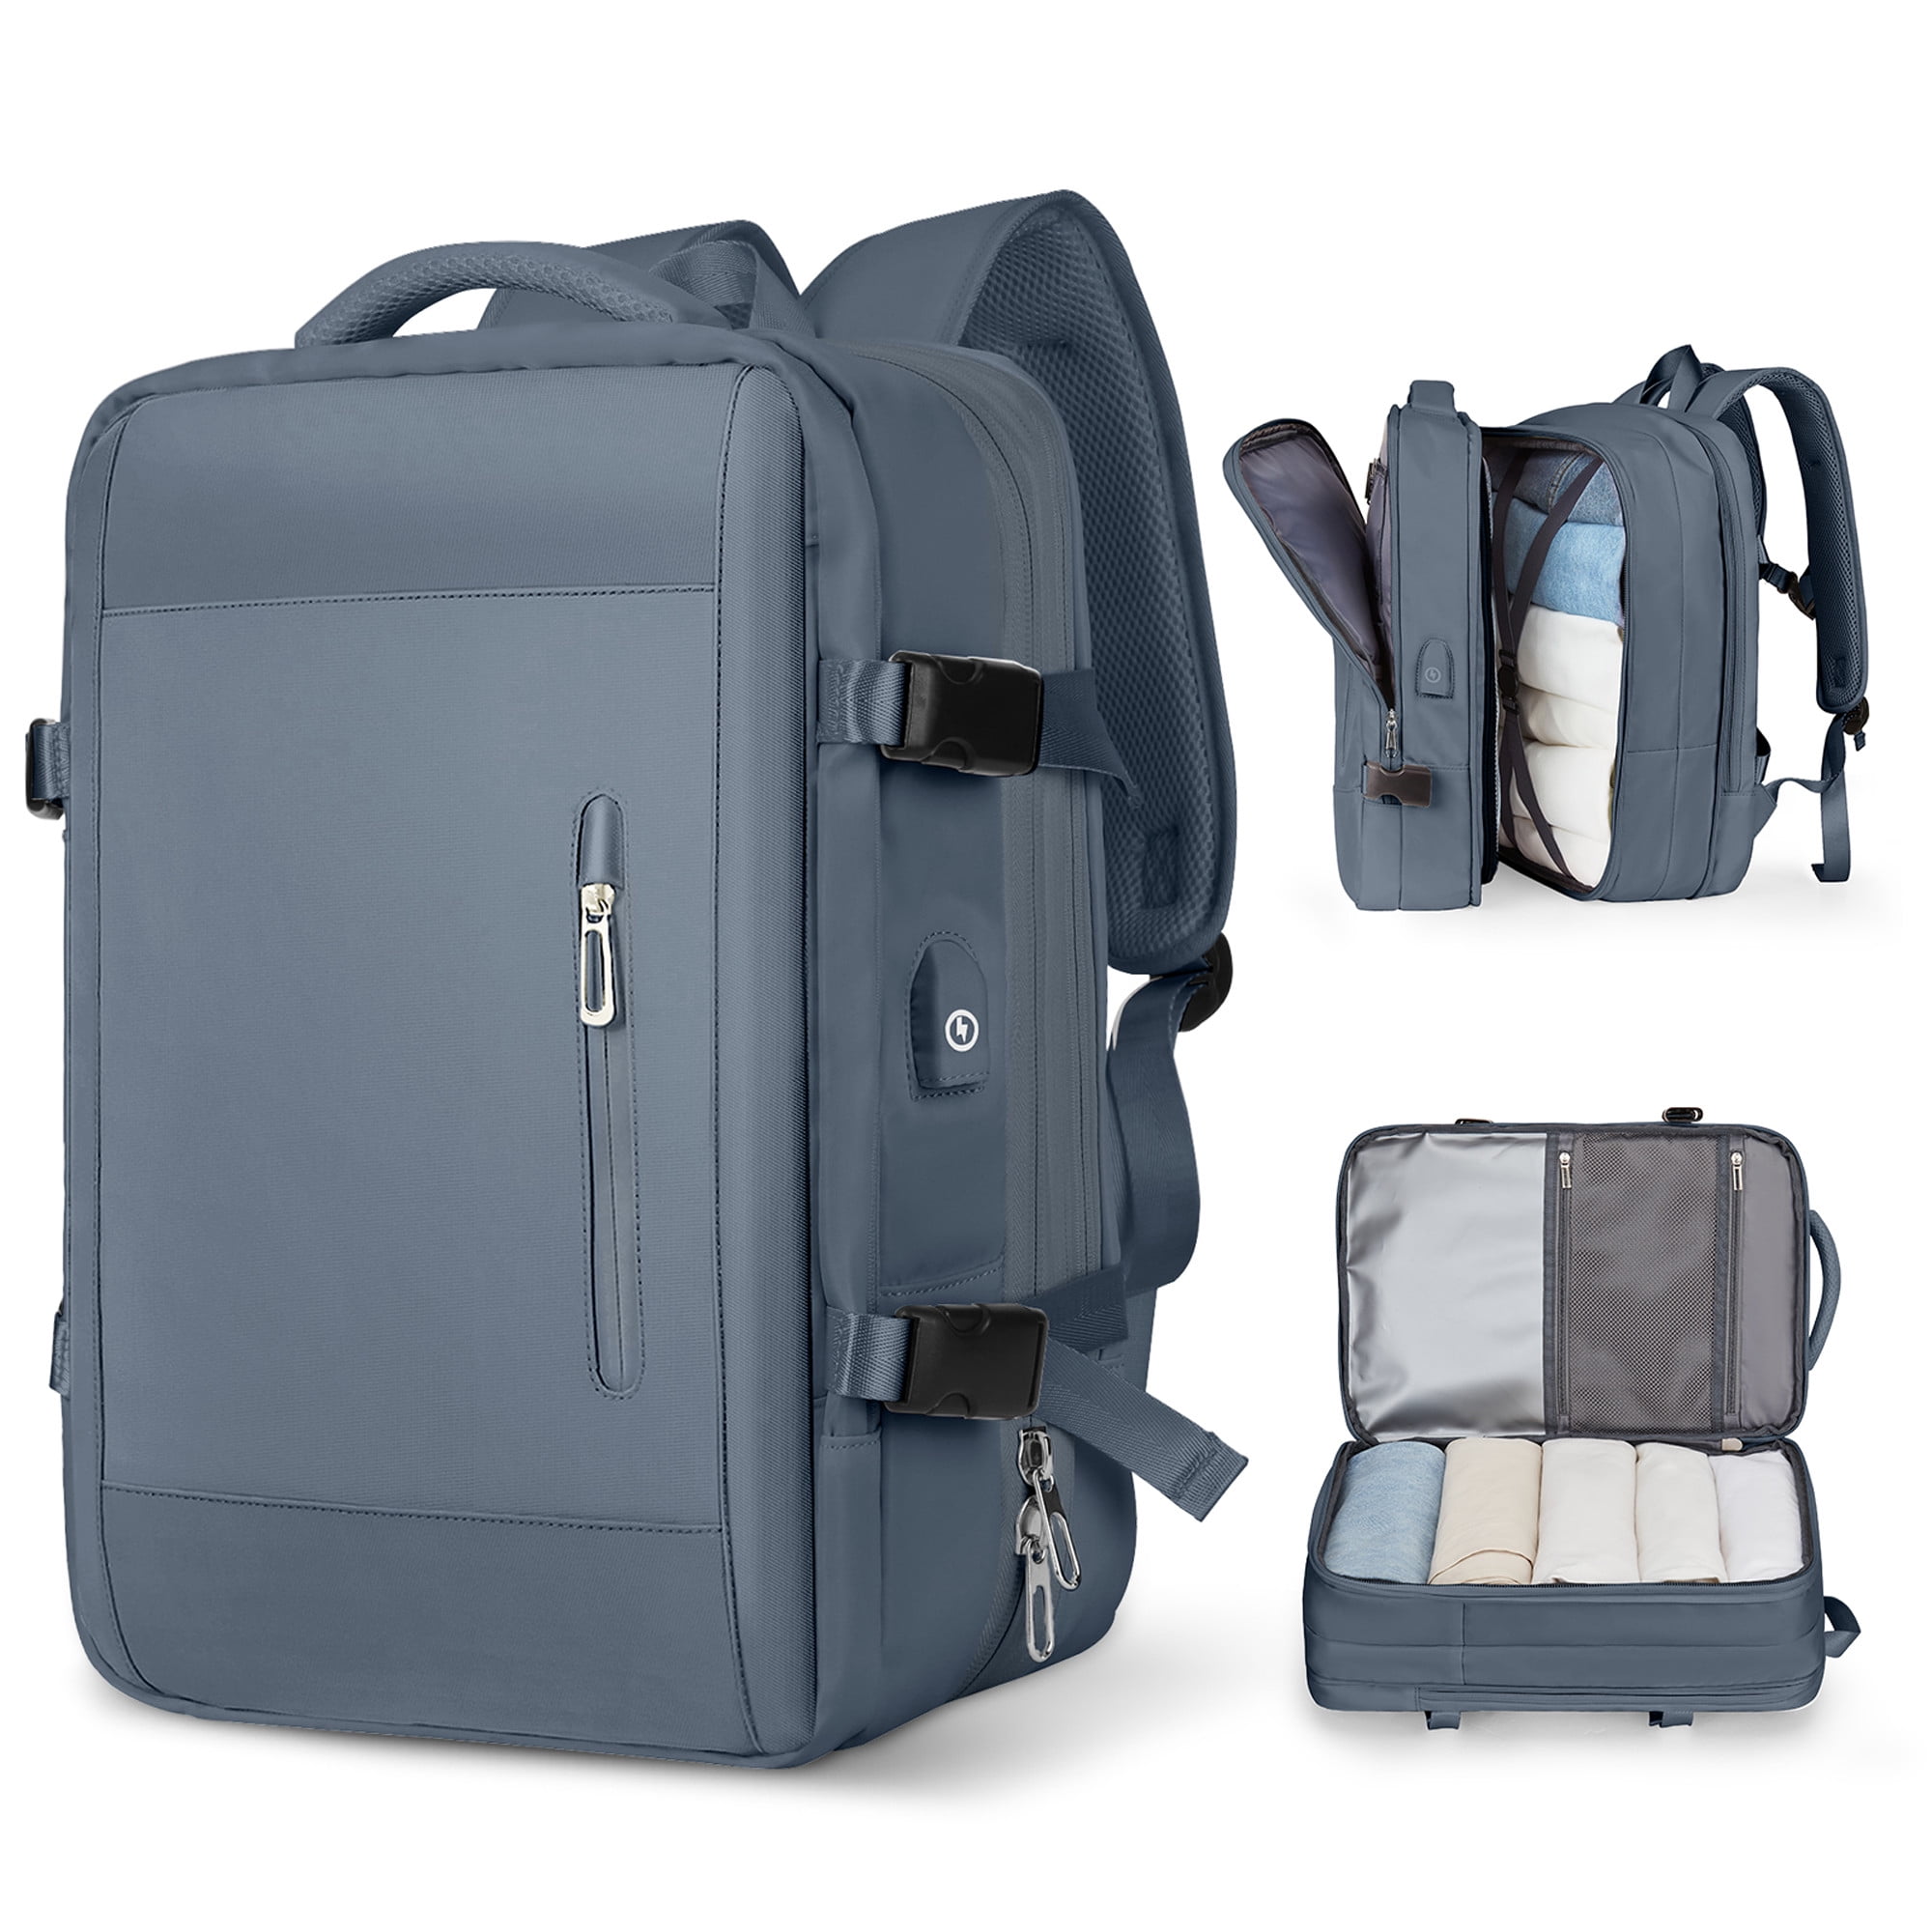 Large Travel Backpack for Women Men, Carry On Backpack for